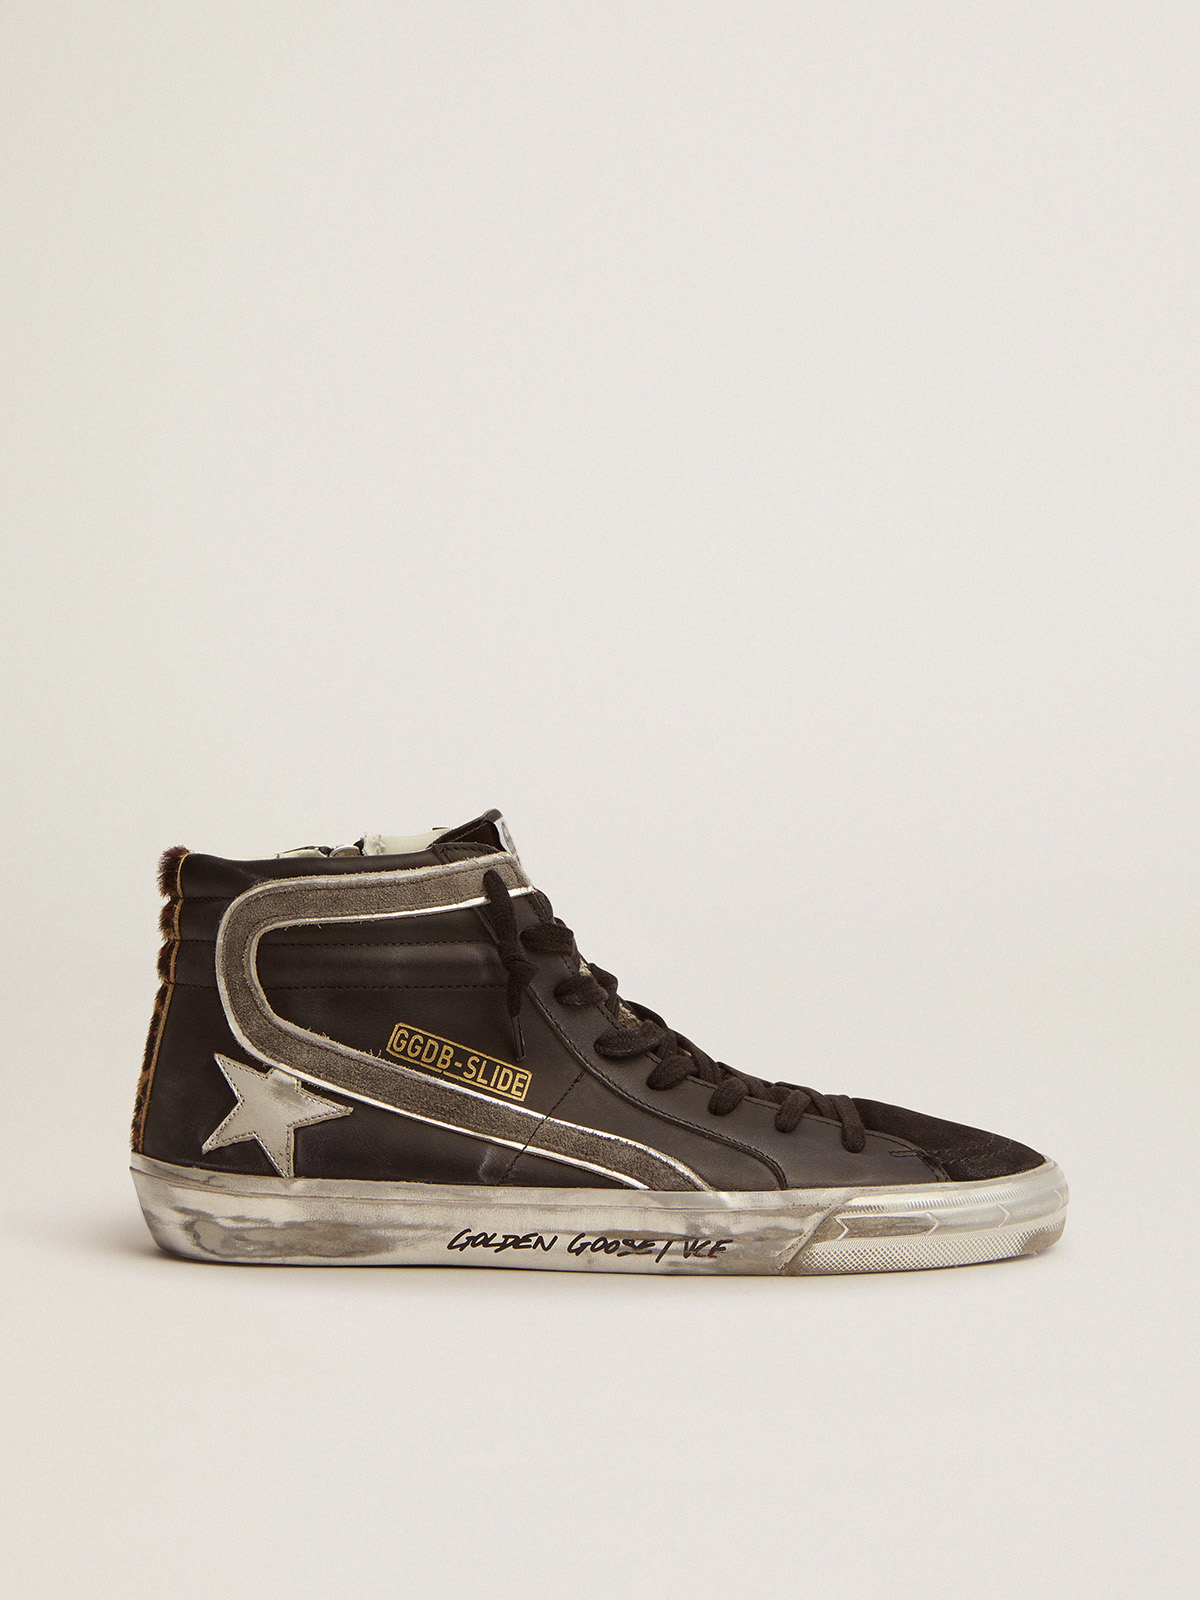 Slide sneakers in black leather with leopard-print pony skin heel tab |  Golden Goose